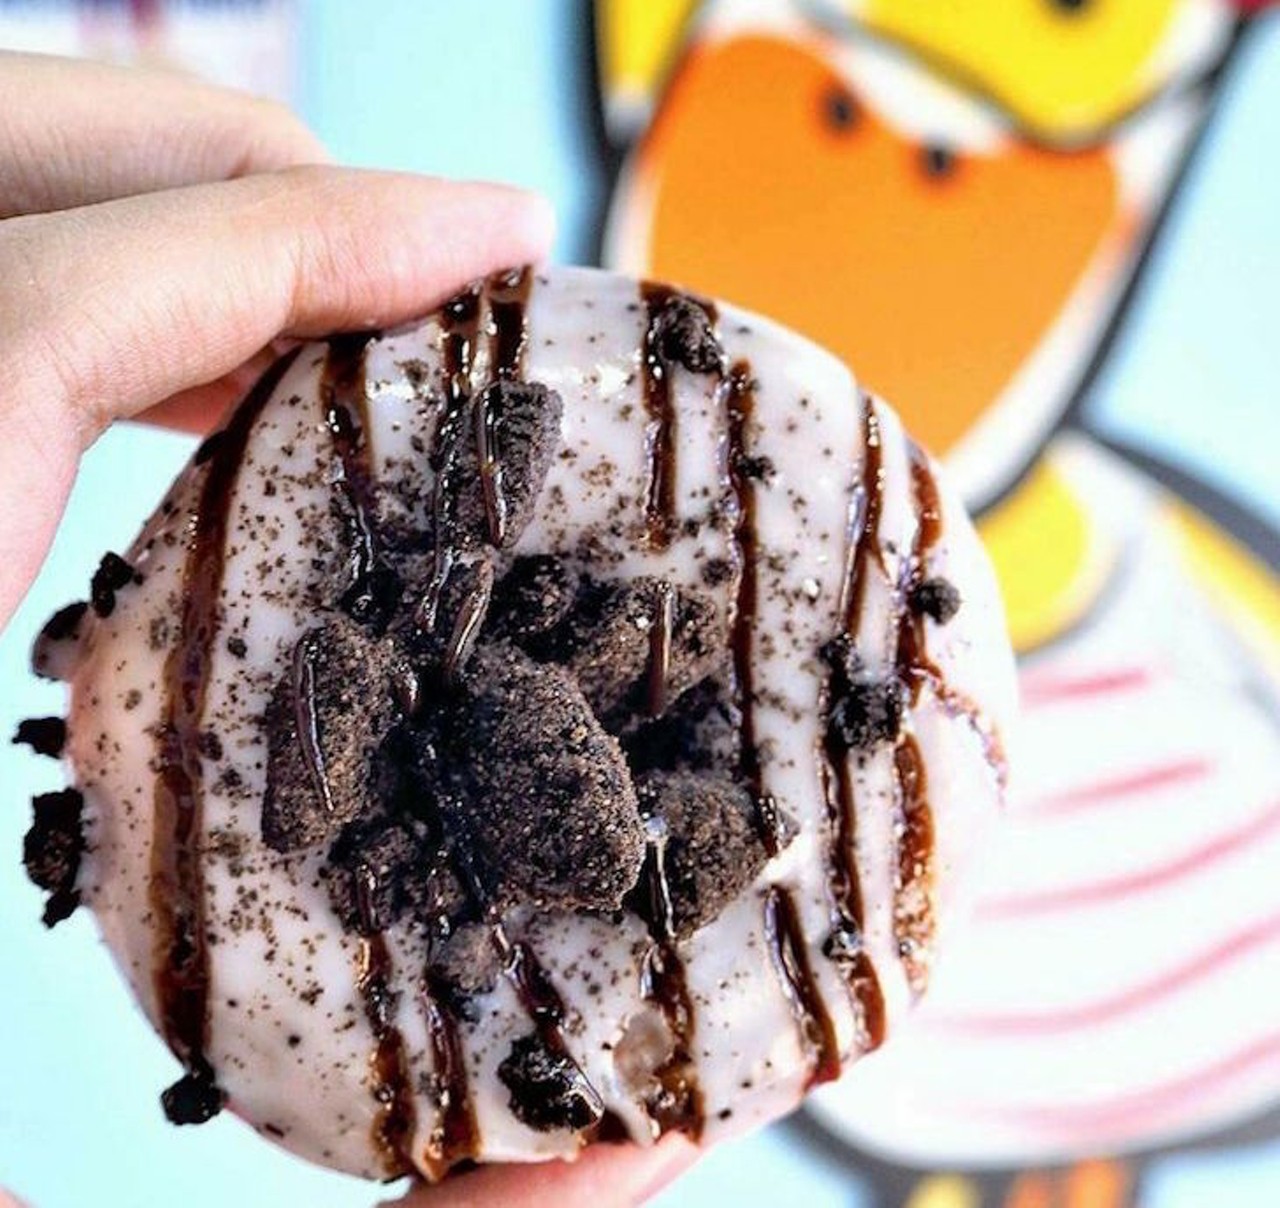 Must try: Vanilla with Oreo and Hot Fudge Donut
Photo via orlandodatenightguide/Instagram